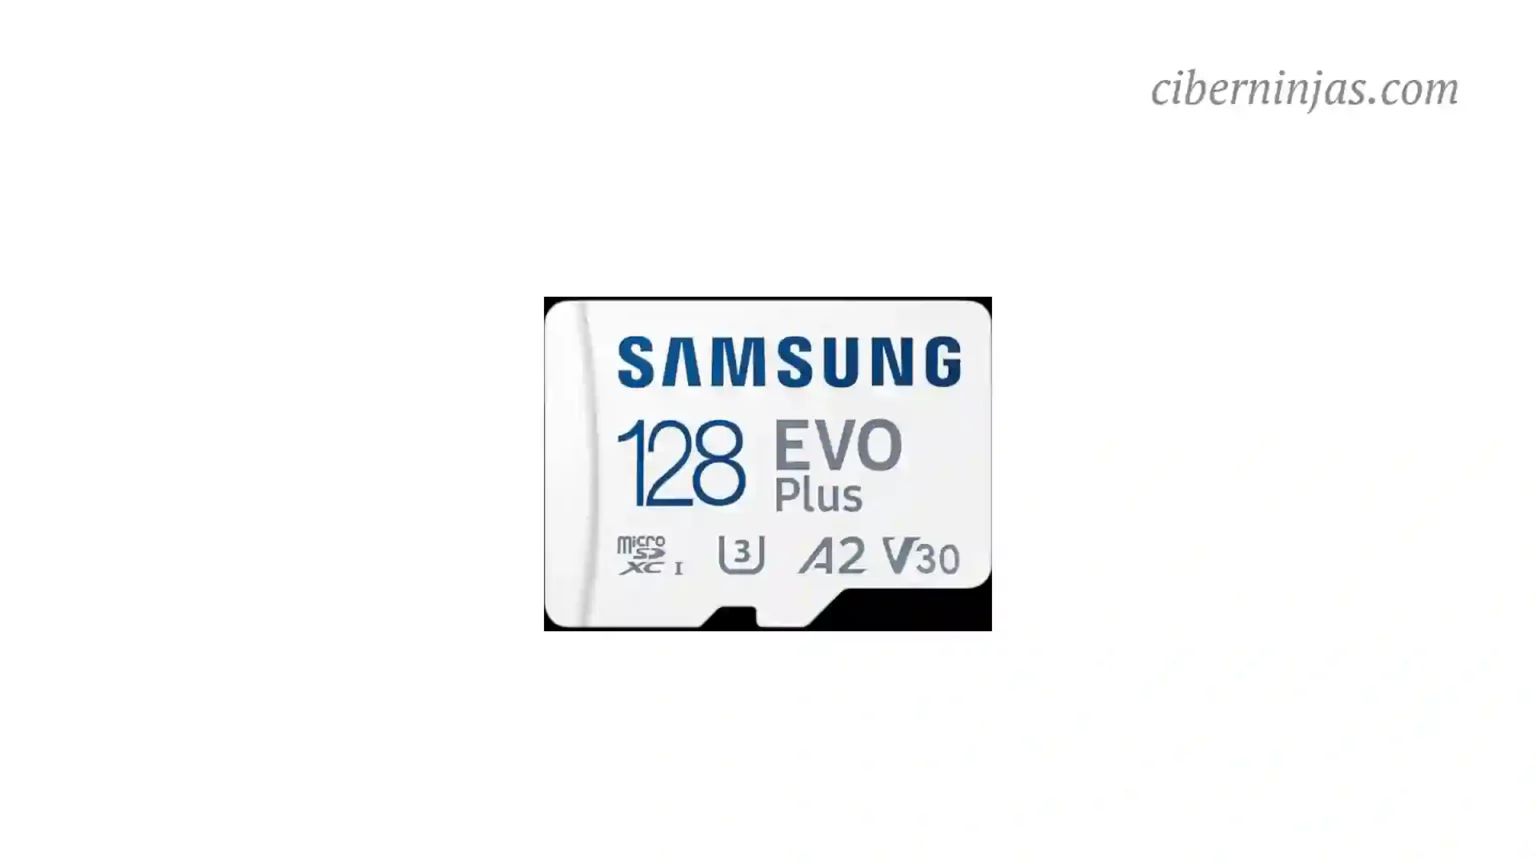 No pagues 24 €, consigue la microSDXC Samsung EVO de 128 GB por solo 13 €